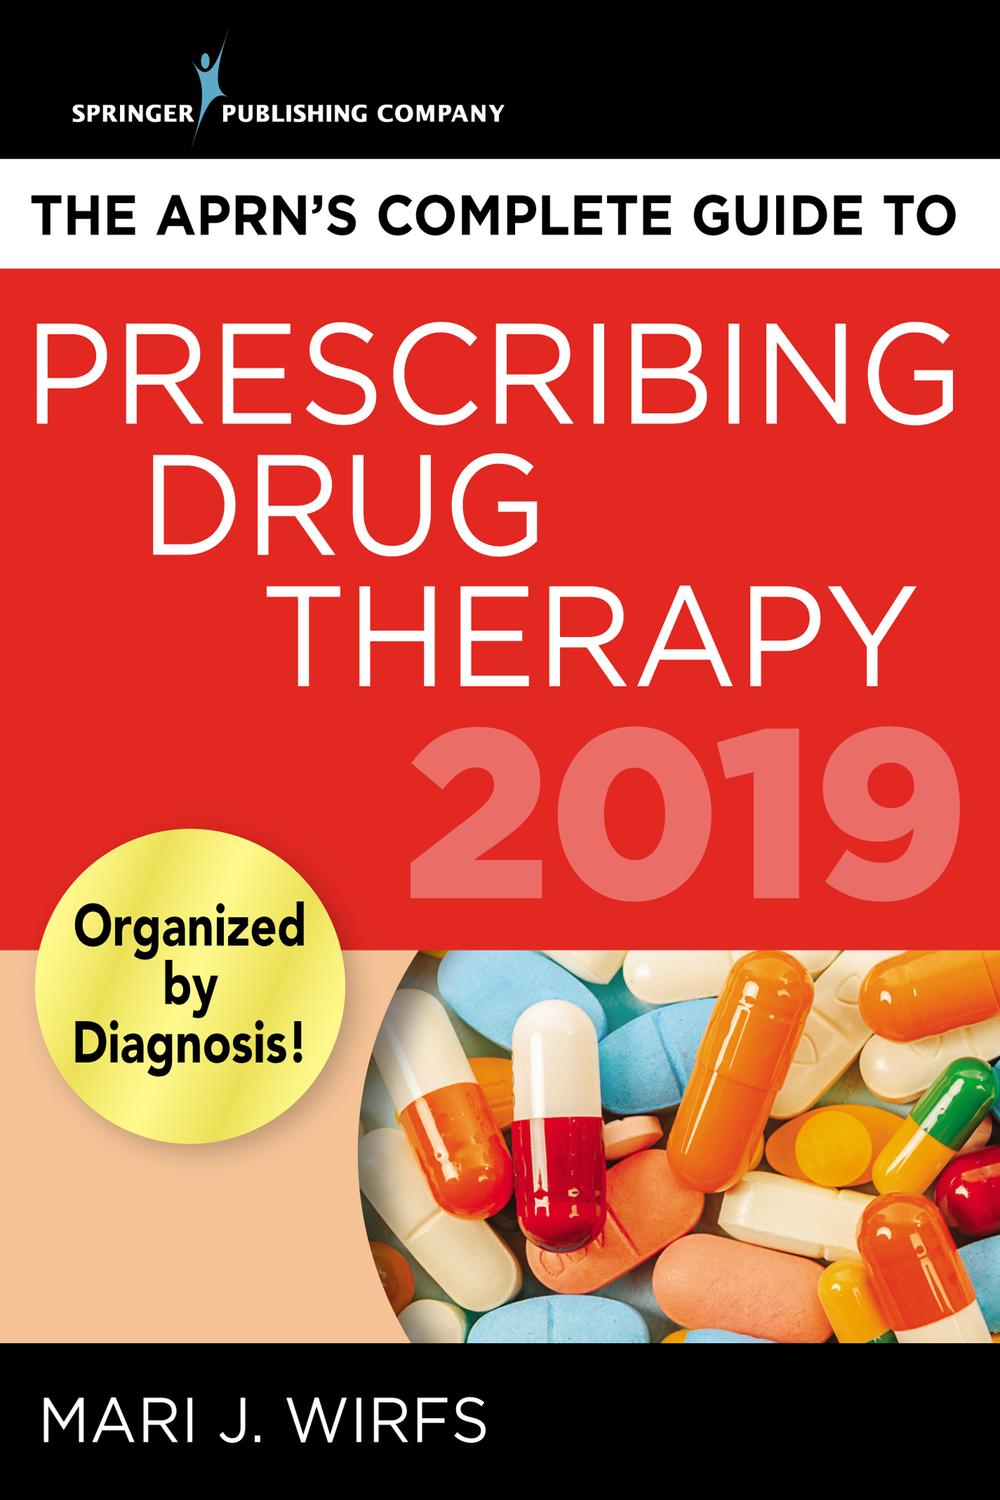 The APRN’s Complete Guide to Prescribing Drug Therapy 2019th Edition